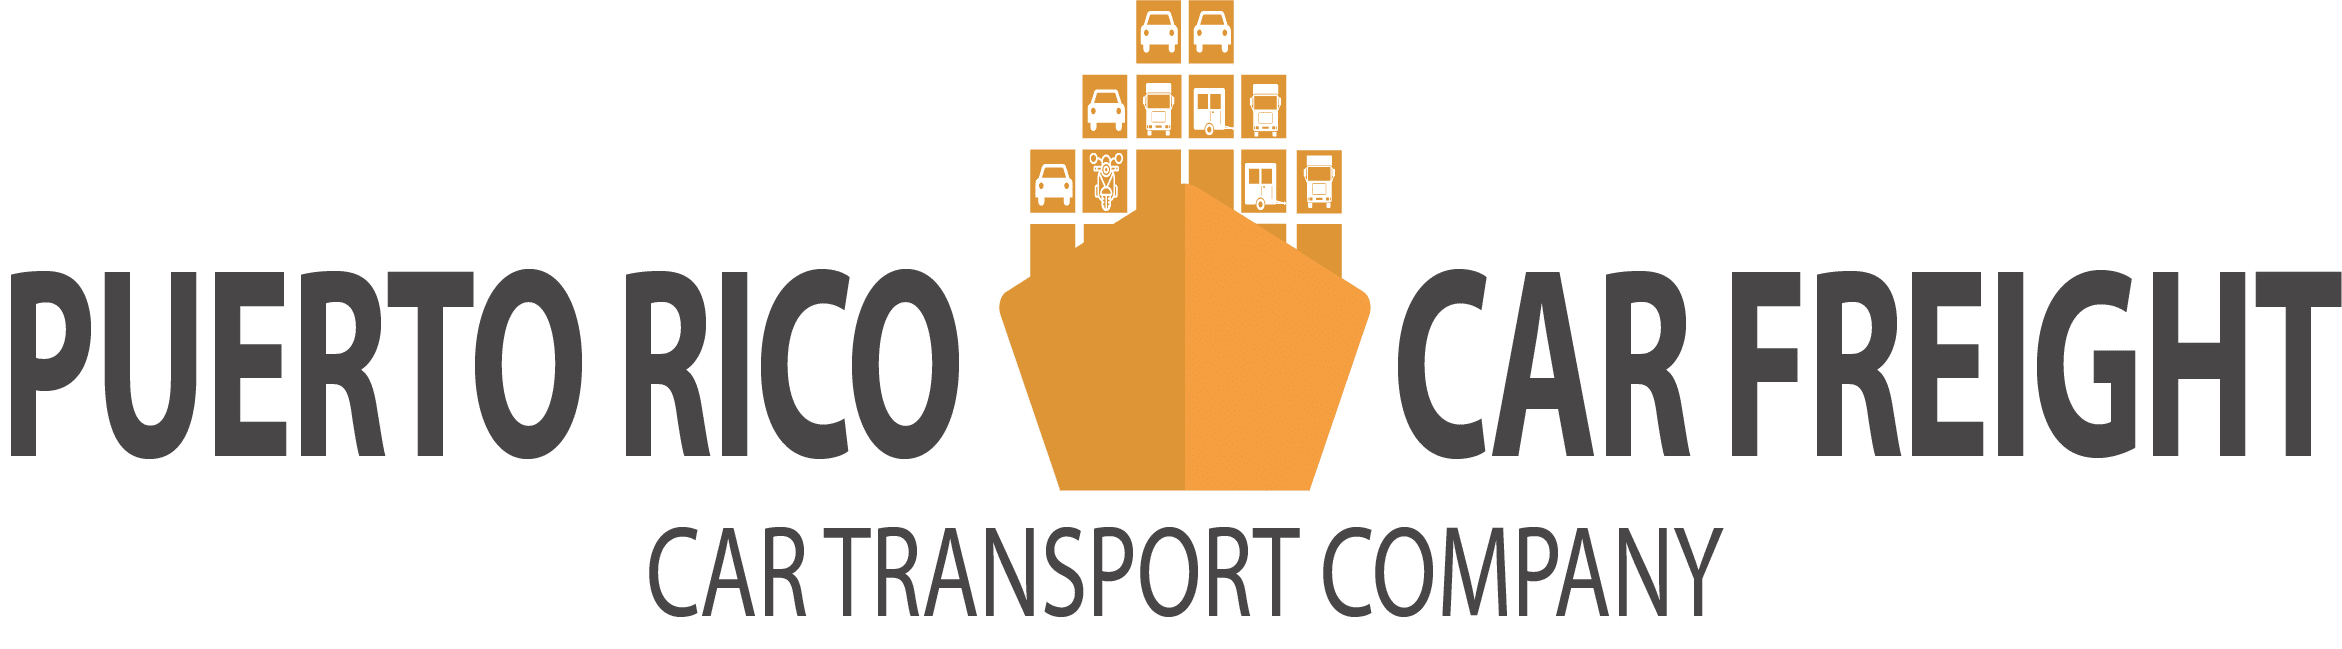 logo nuevo PR car freight